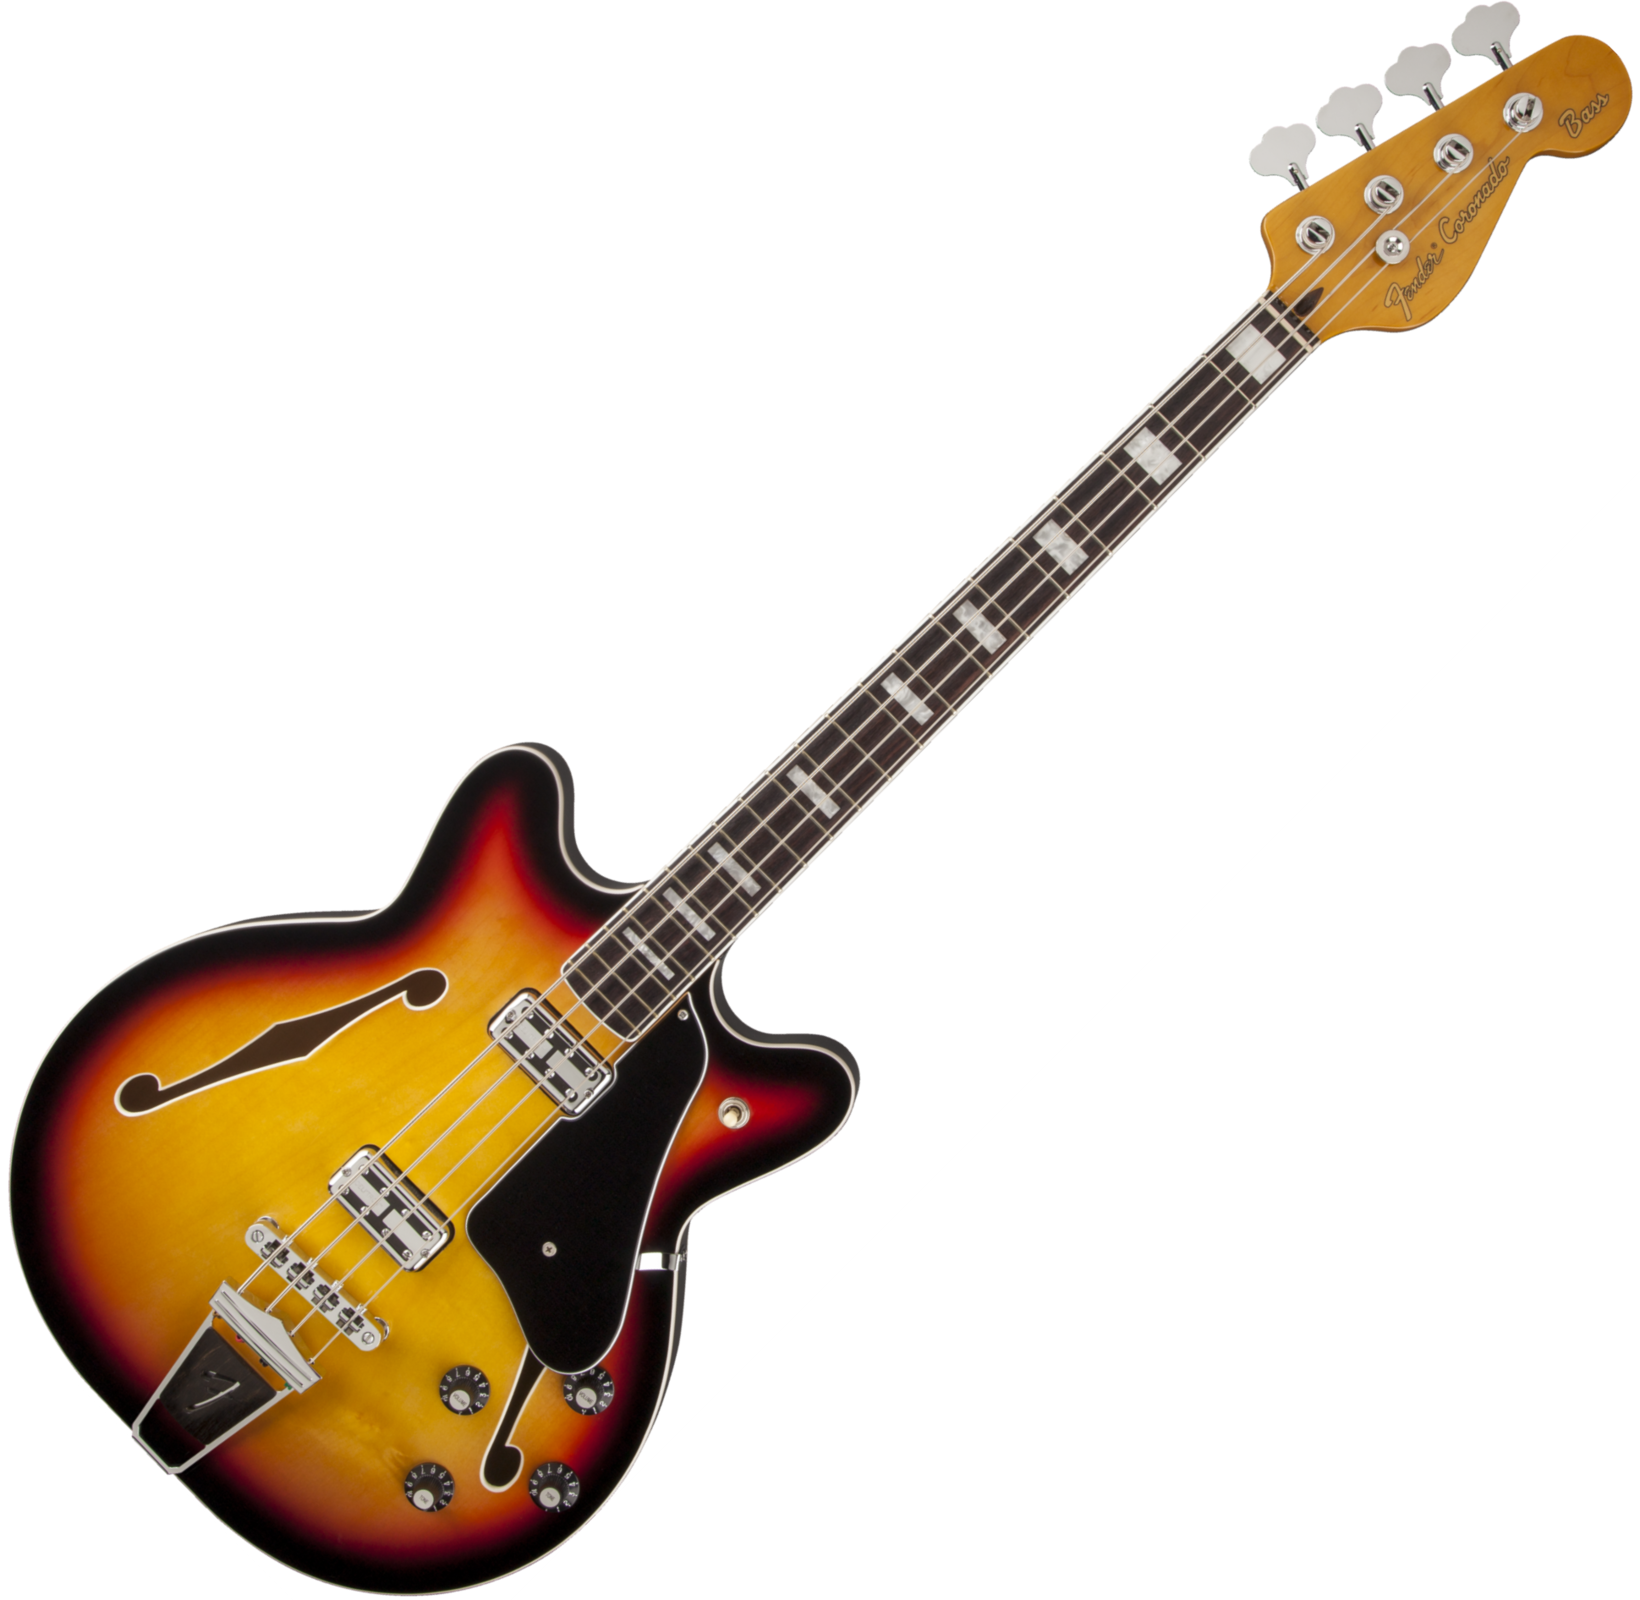 Basse semi-acoustique Fender Coronado Bass SB